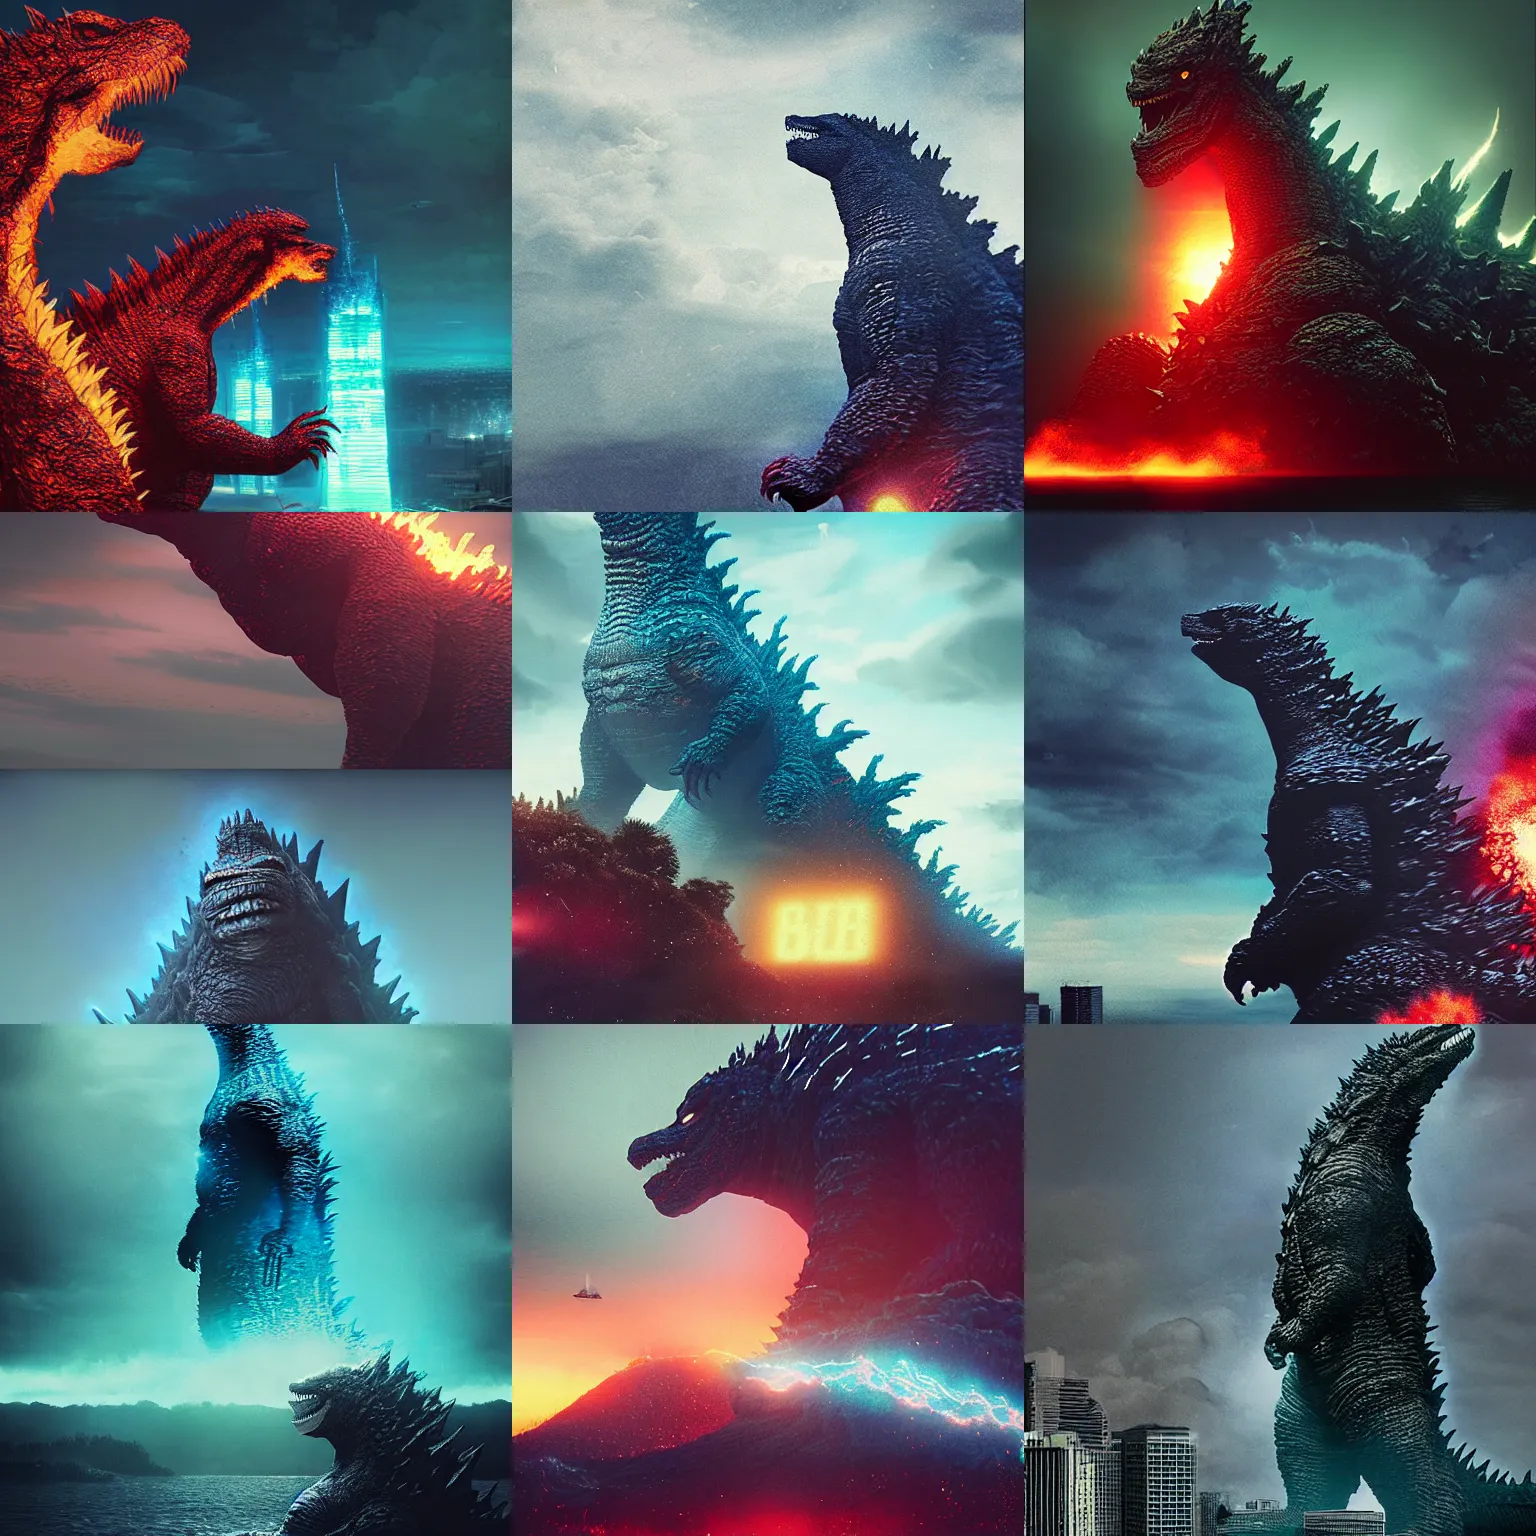 Prompt: Godzilla, artwork by Beeple